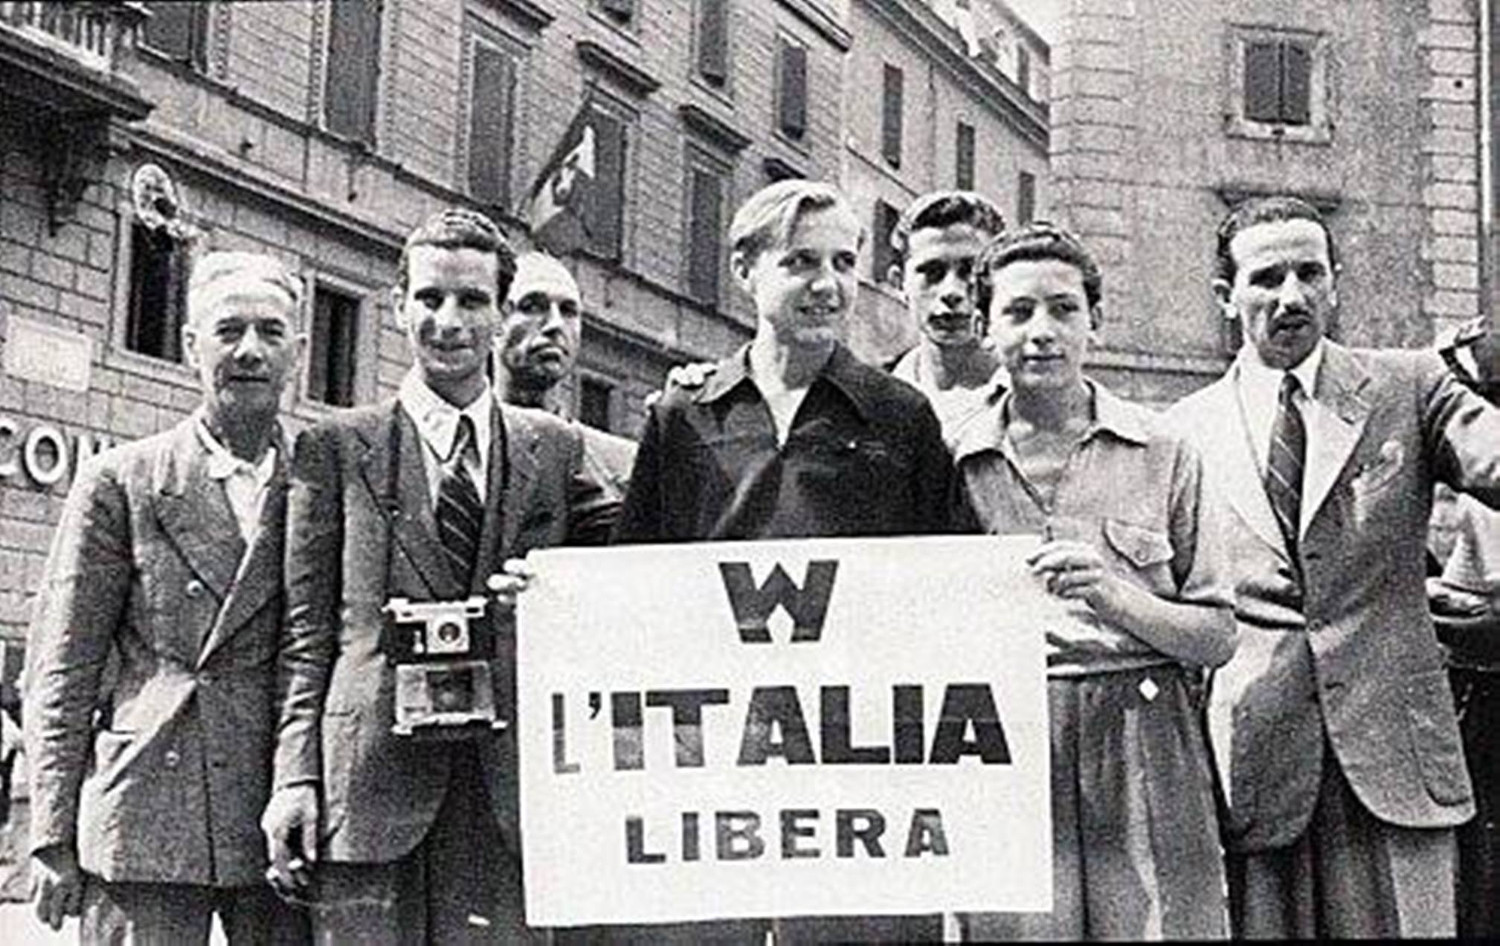 Viva l'Italia libera